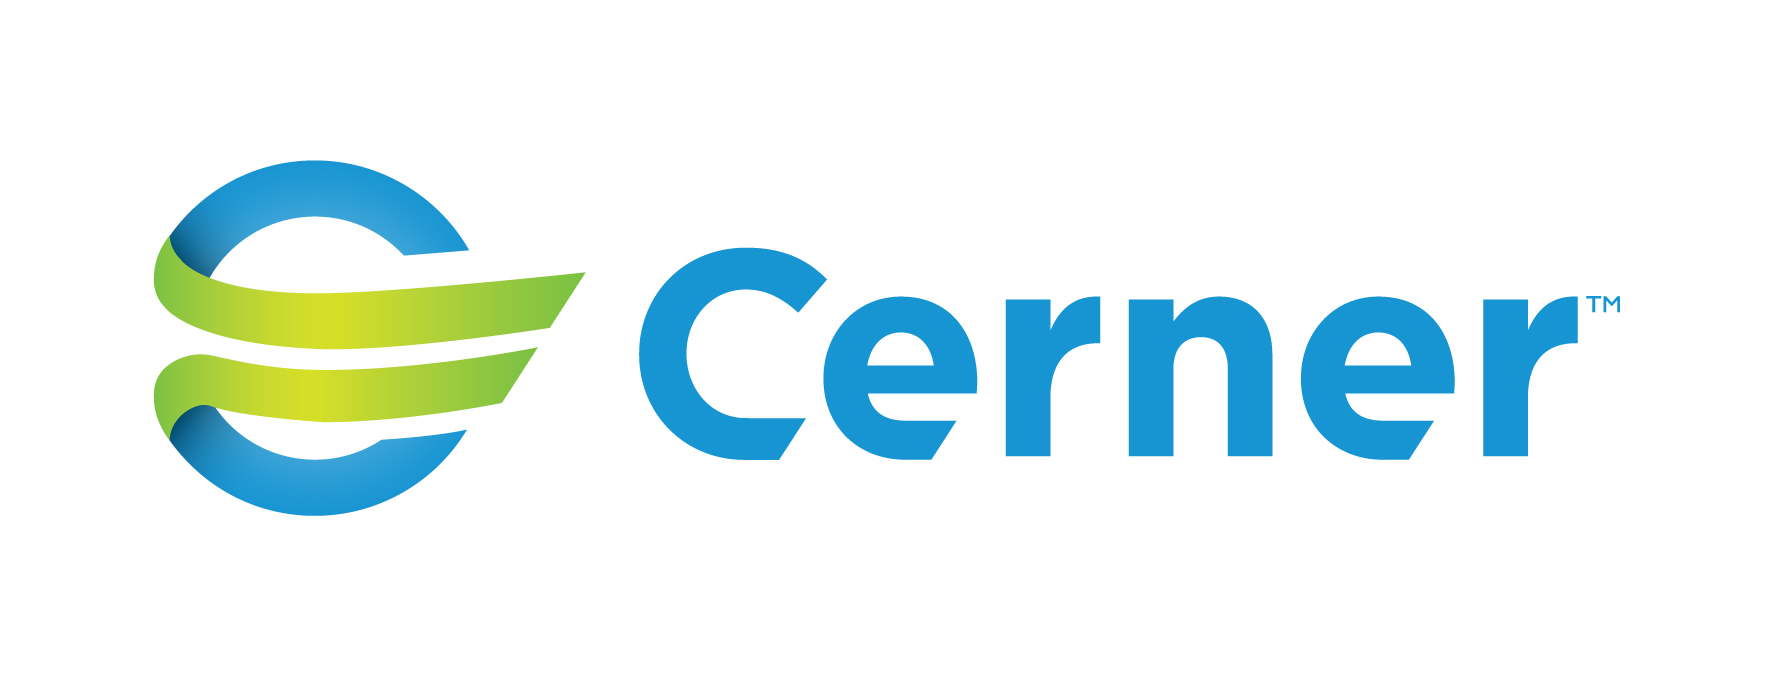 Cerner_CMYK_Standard_horizontal logo.jpg